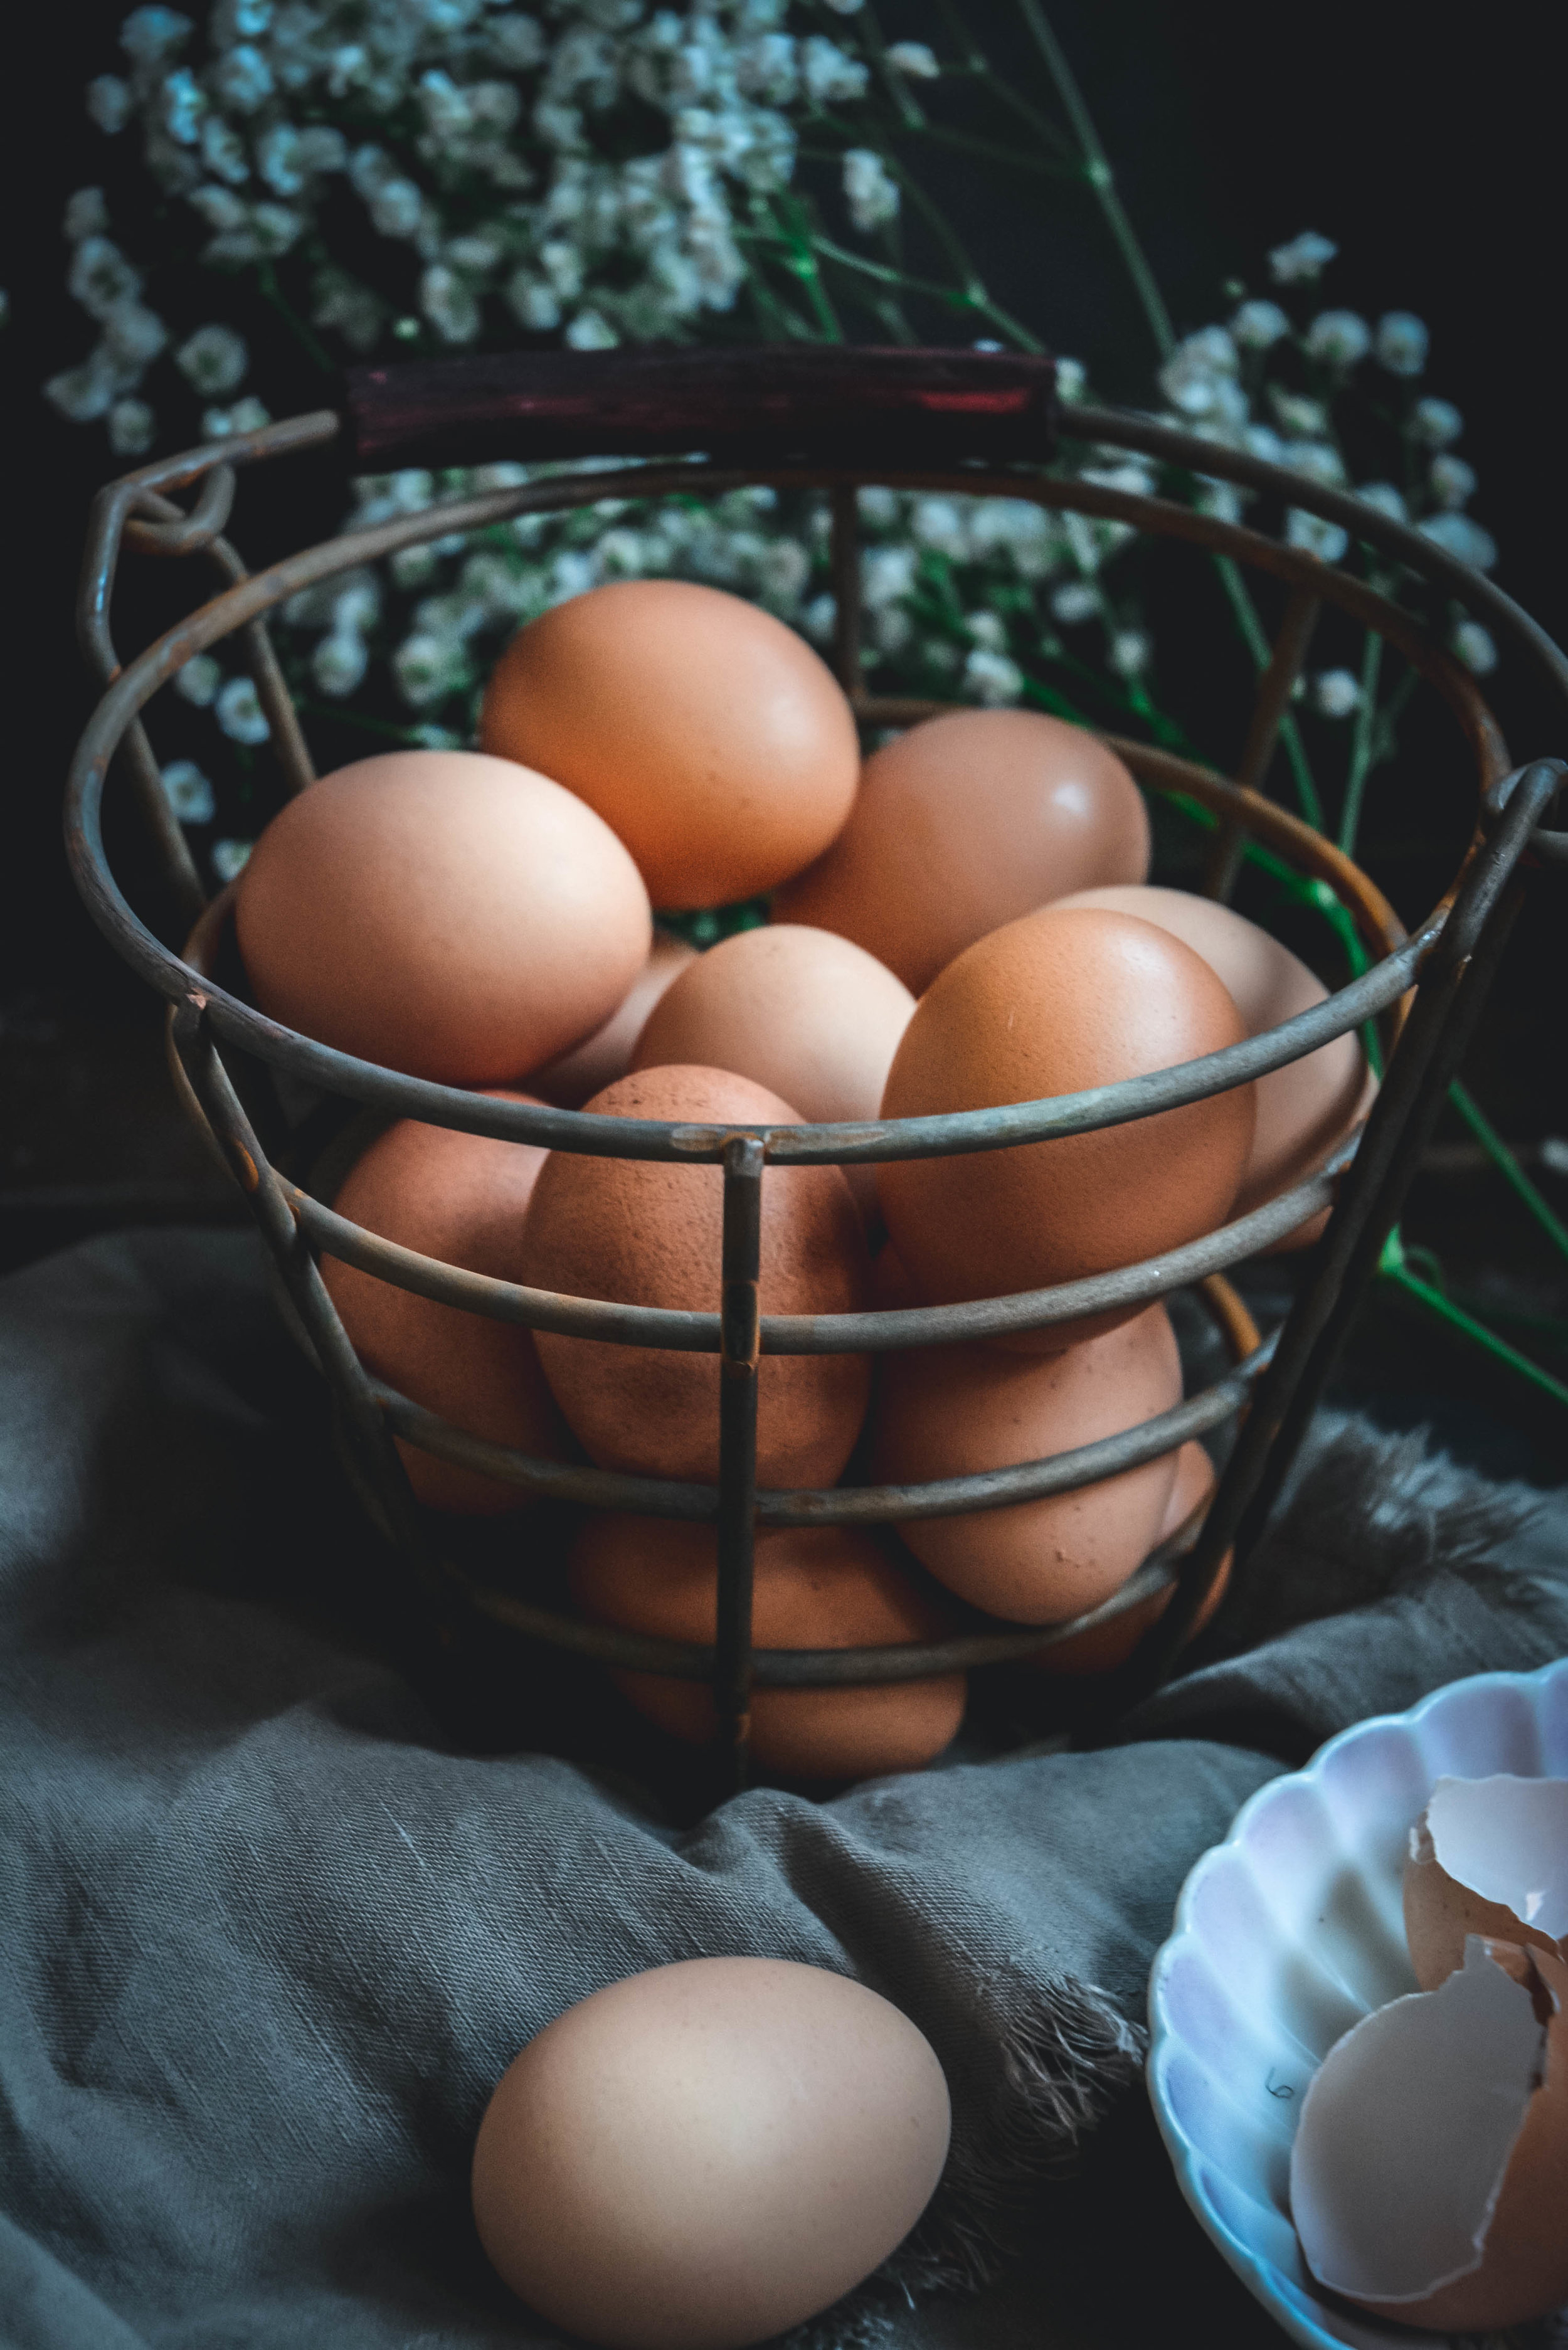 Eggs in basket on napkin